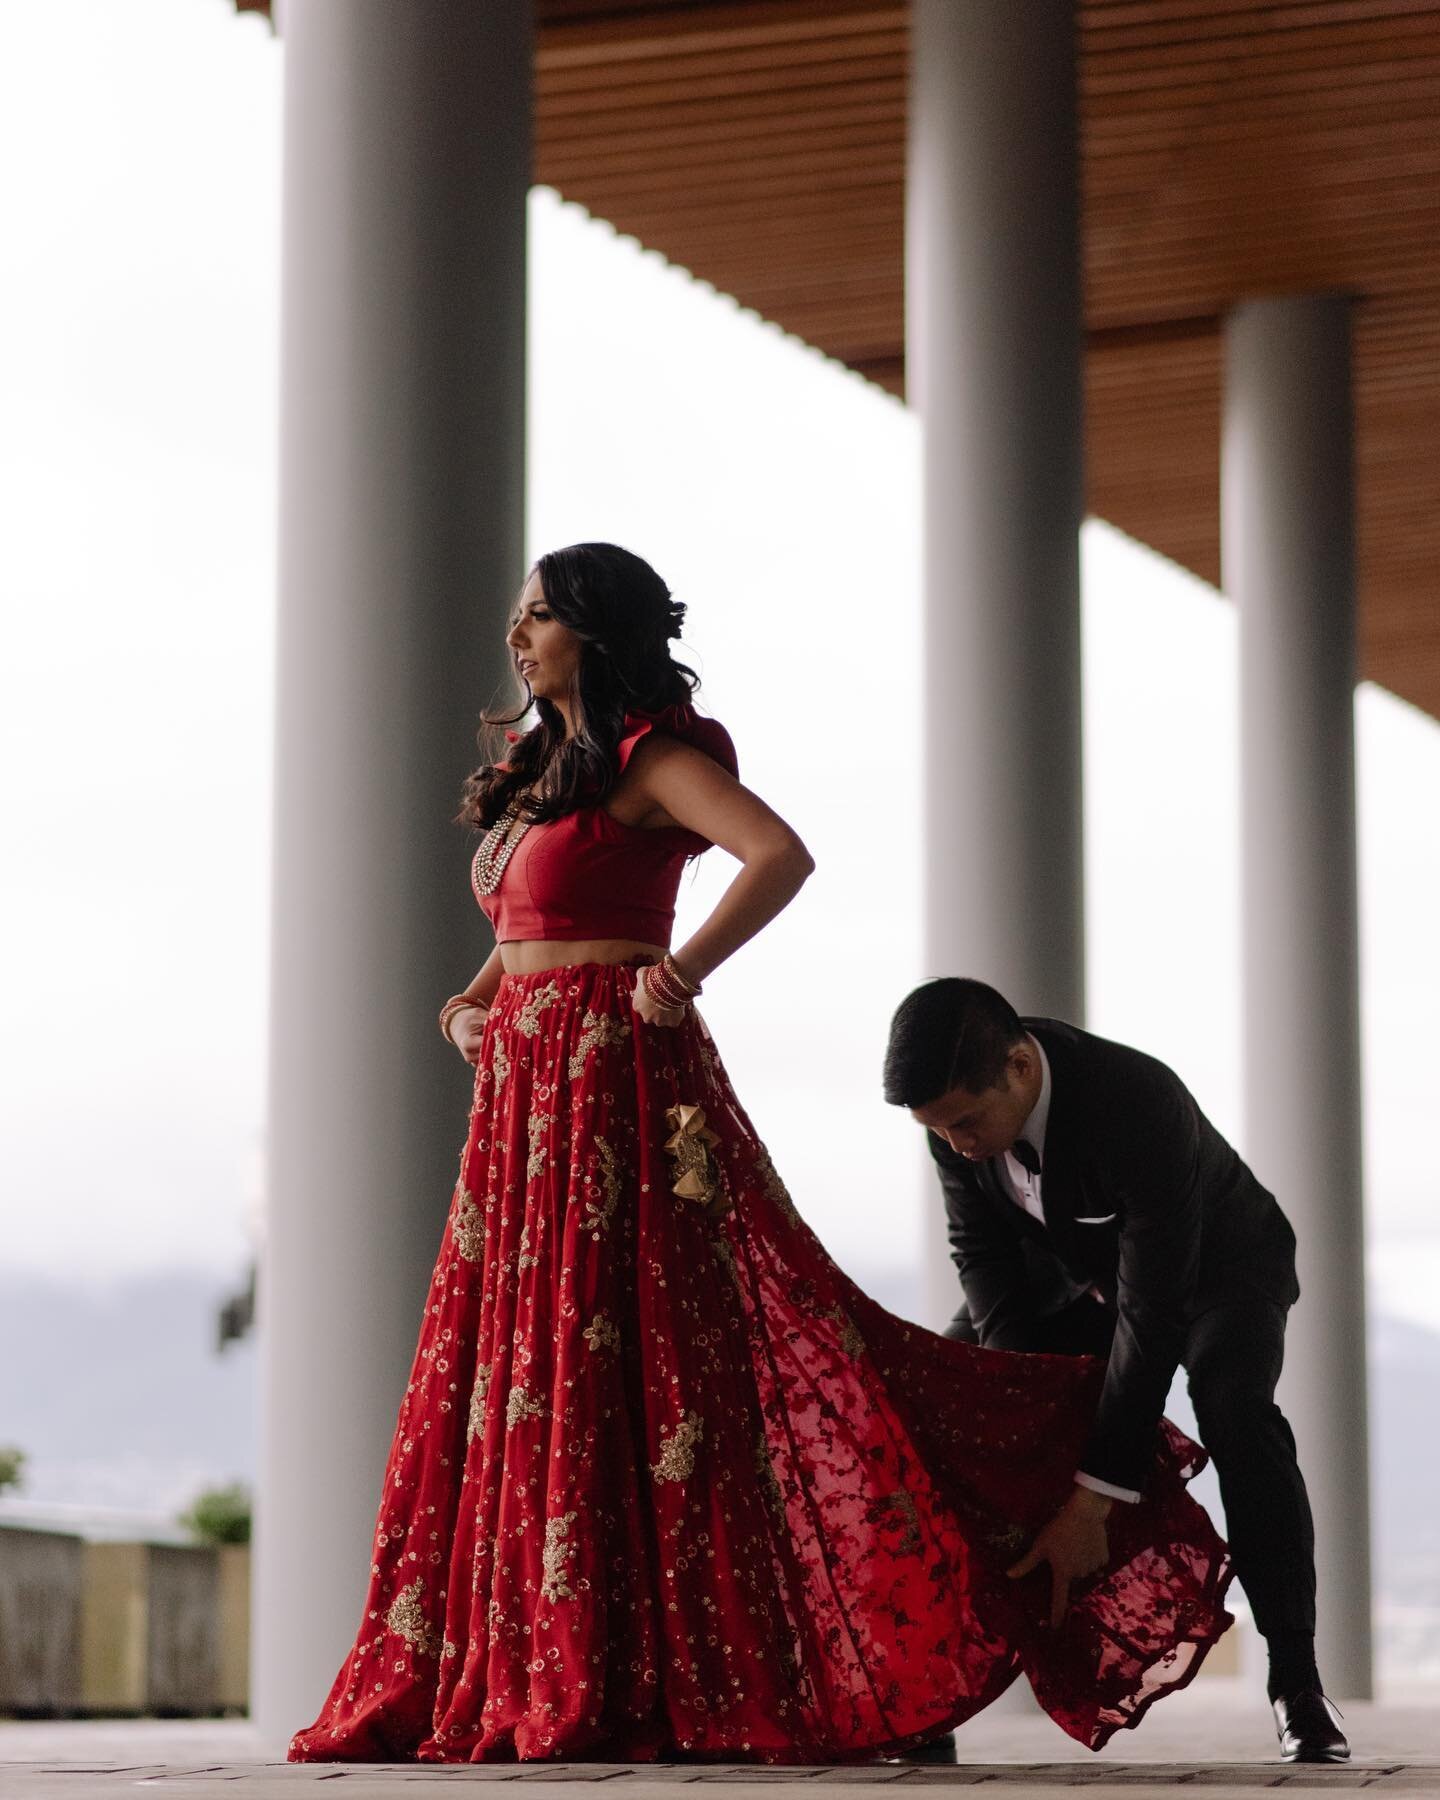 Husband duties begin right away 😂 

Makeup and hair: @nalinimaharaj 
Photography: @mathiasfast 

✨For bookings and inquiries please email info@nalinimaharaj.com or text 604-727-0285 ✨⠀⠀⠀⠀

#newlyweds #newlywed #husbandduties #bride #brideandgroom #b